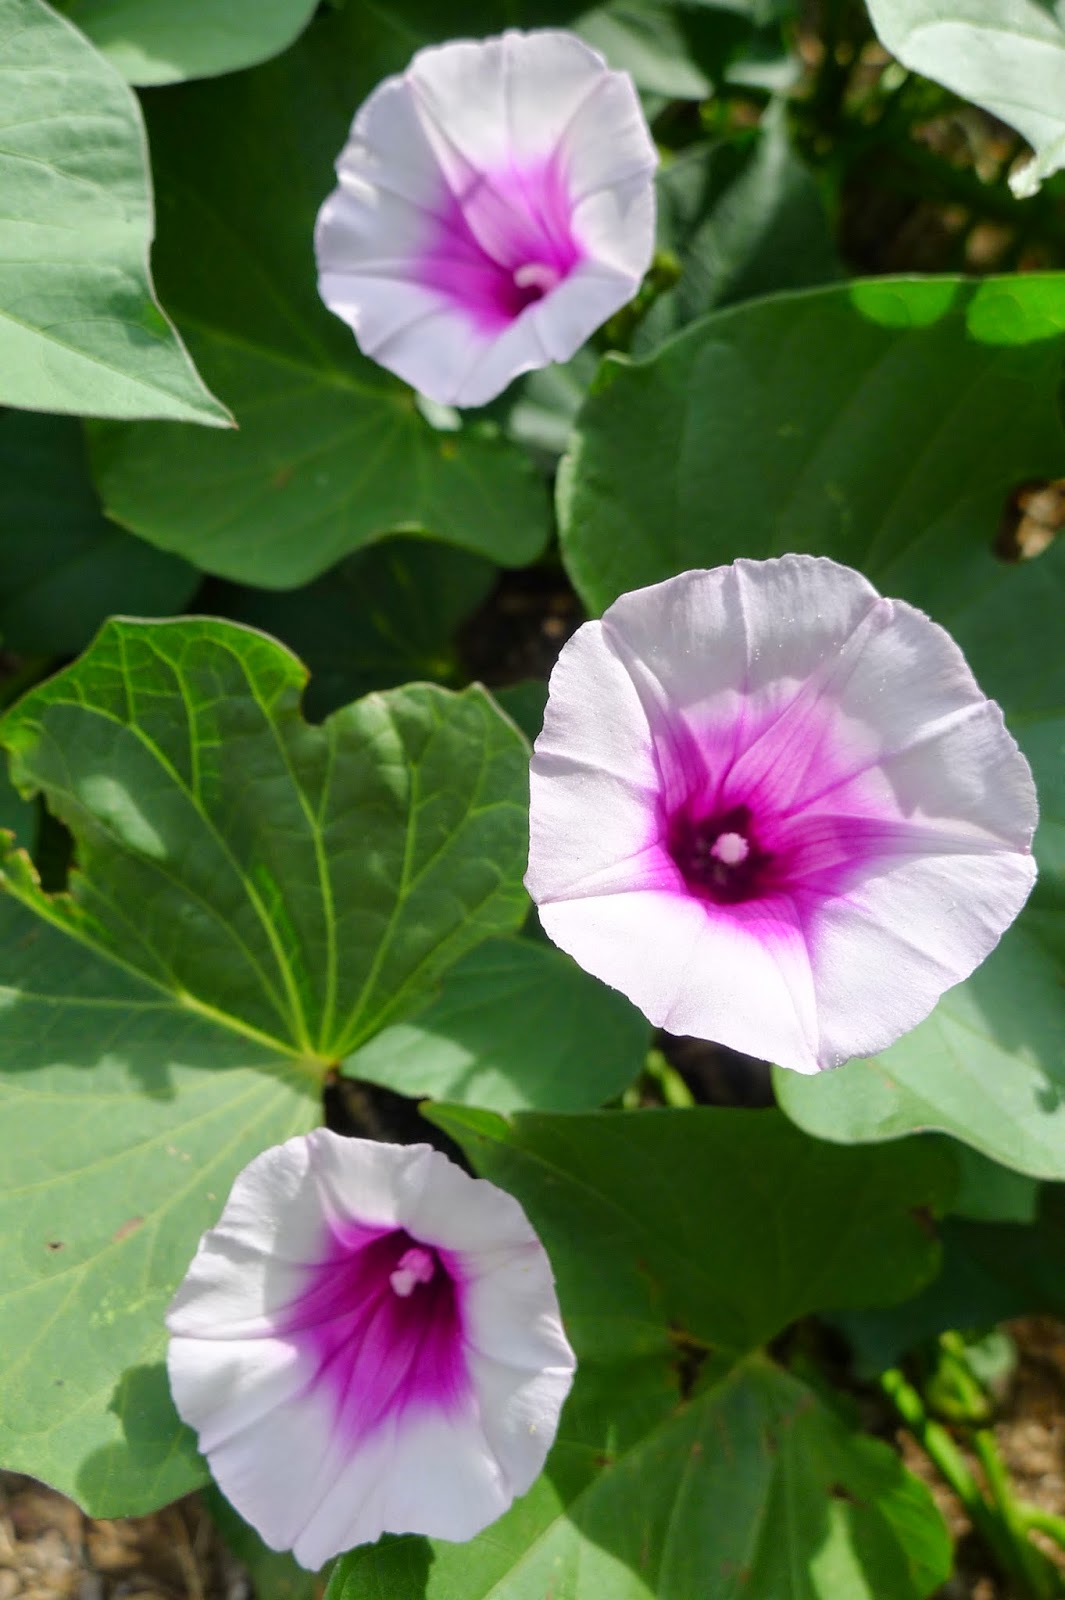 eauregard sweet potato flowers, urban farming, gardening